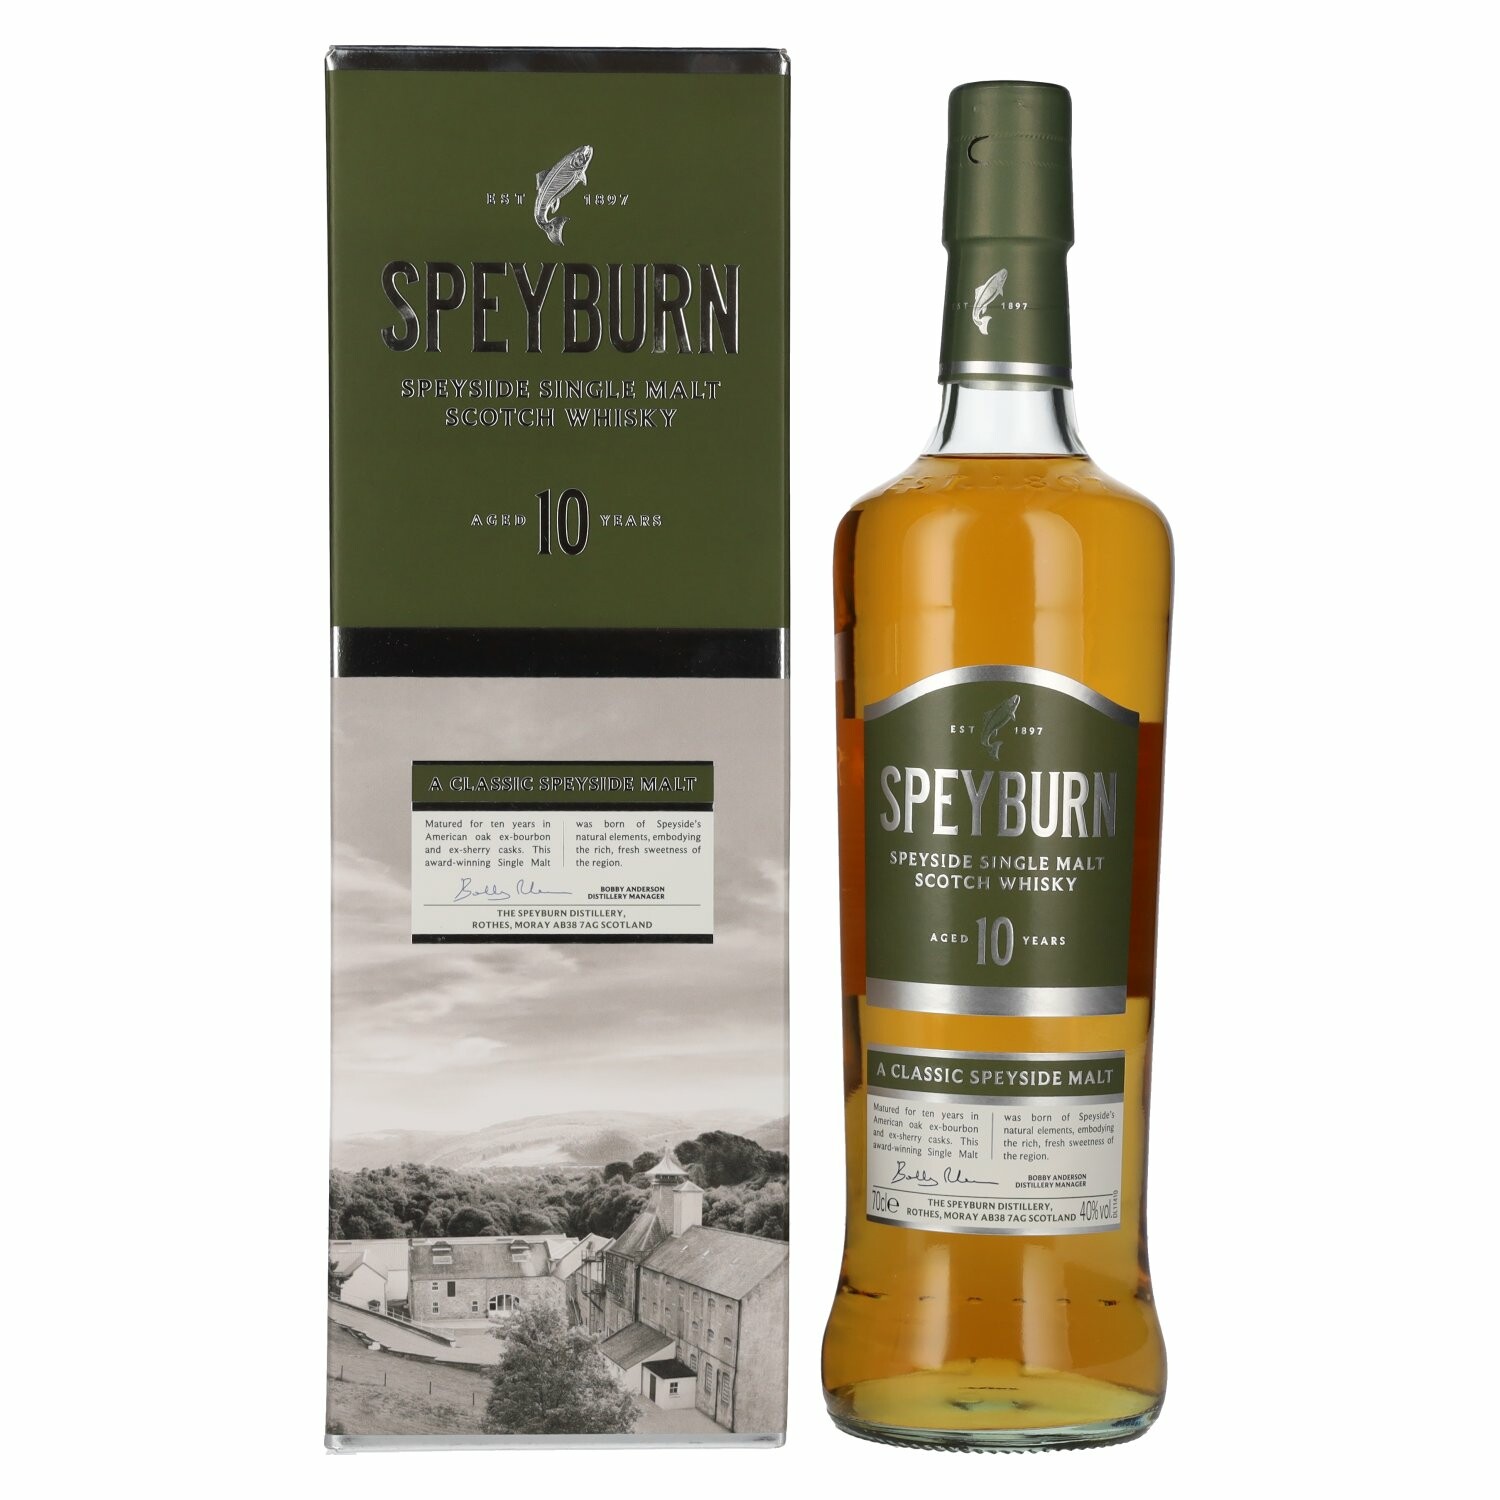 Speyburn 10 Years Old Speyside Single Malt Scotch Whisky 40% Vol. 0,7l in Giftbox